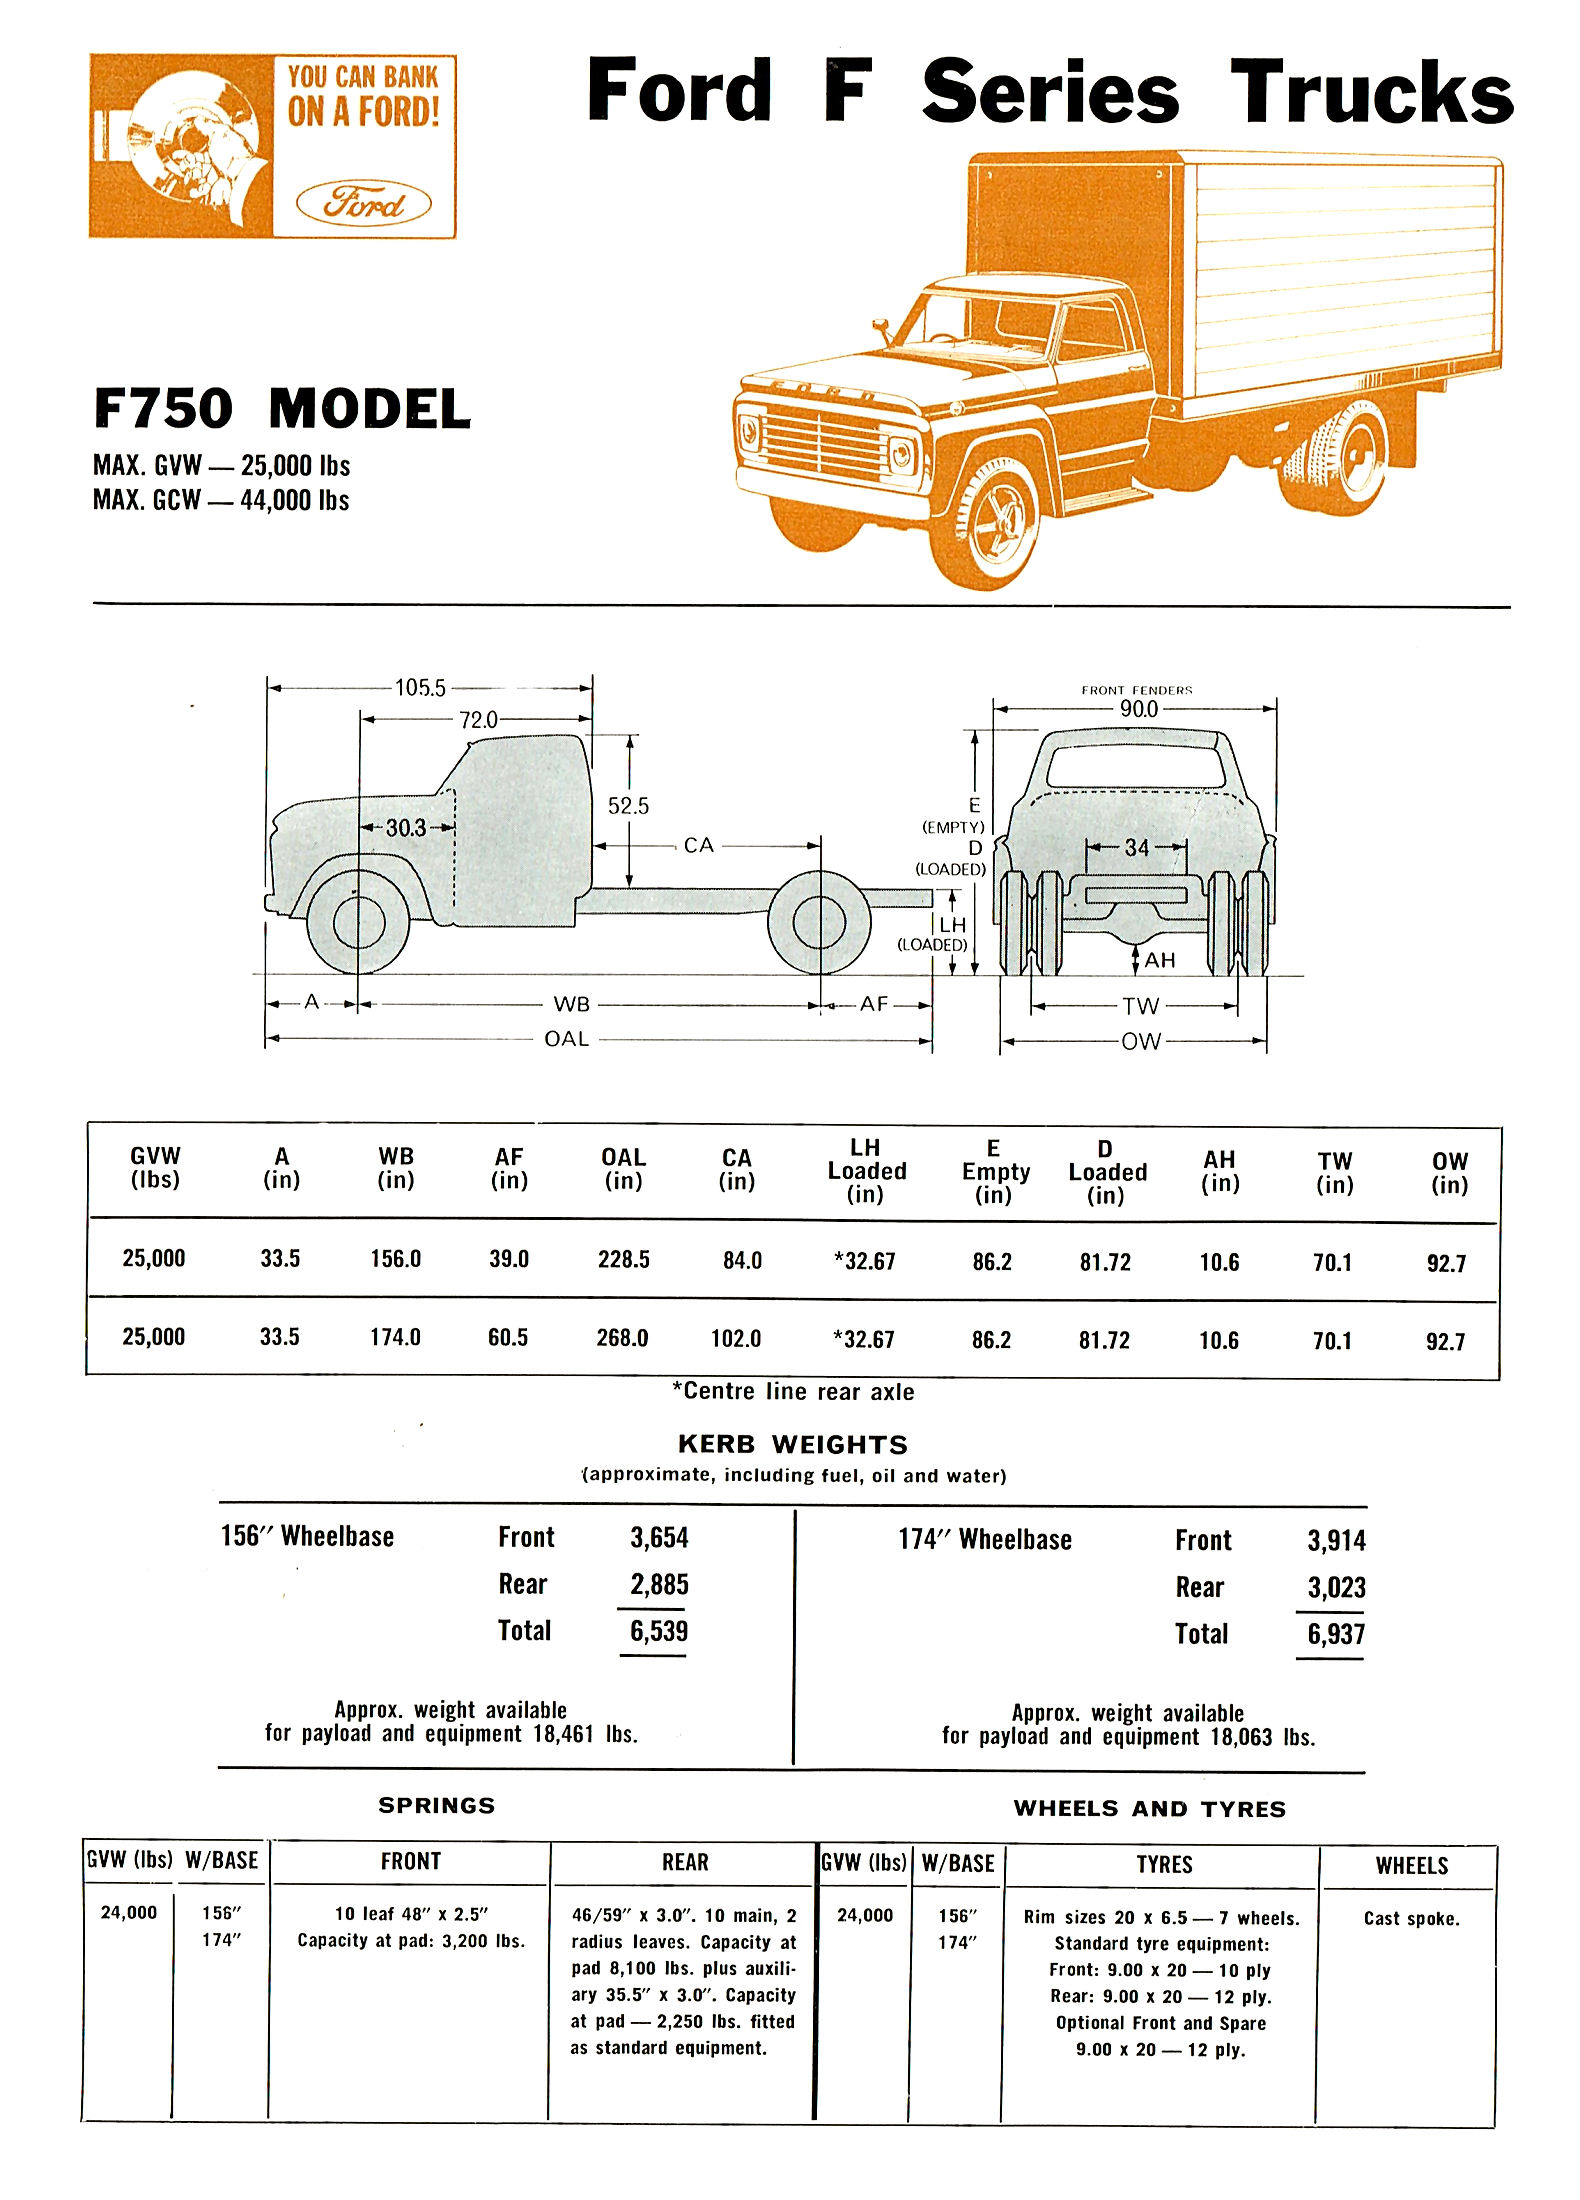 1967 Ford F Series Trucks (Aus)-i05a.jpg-2022-12-7 13.22.40